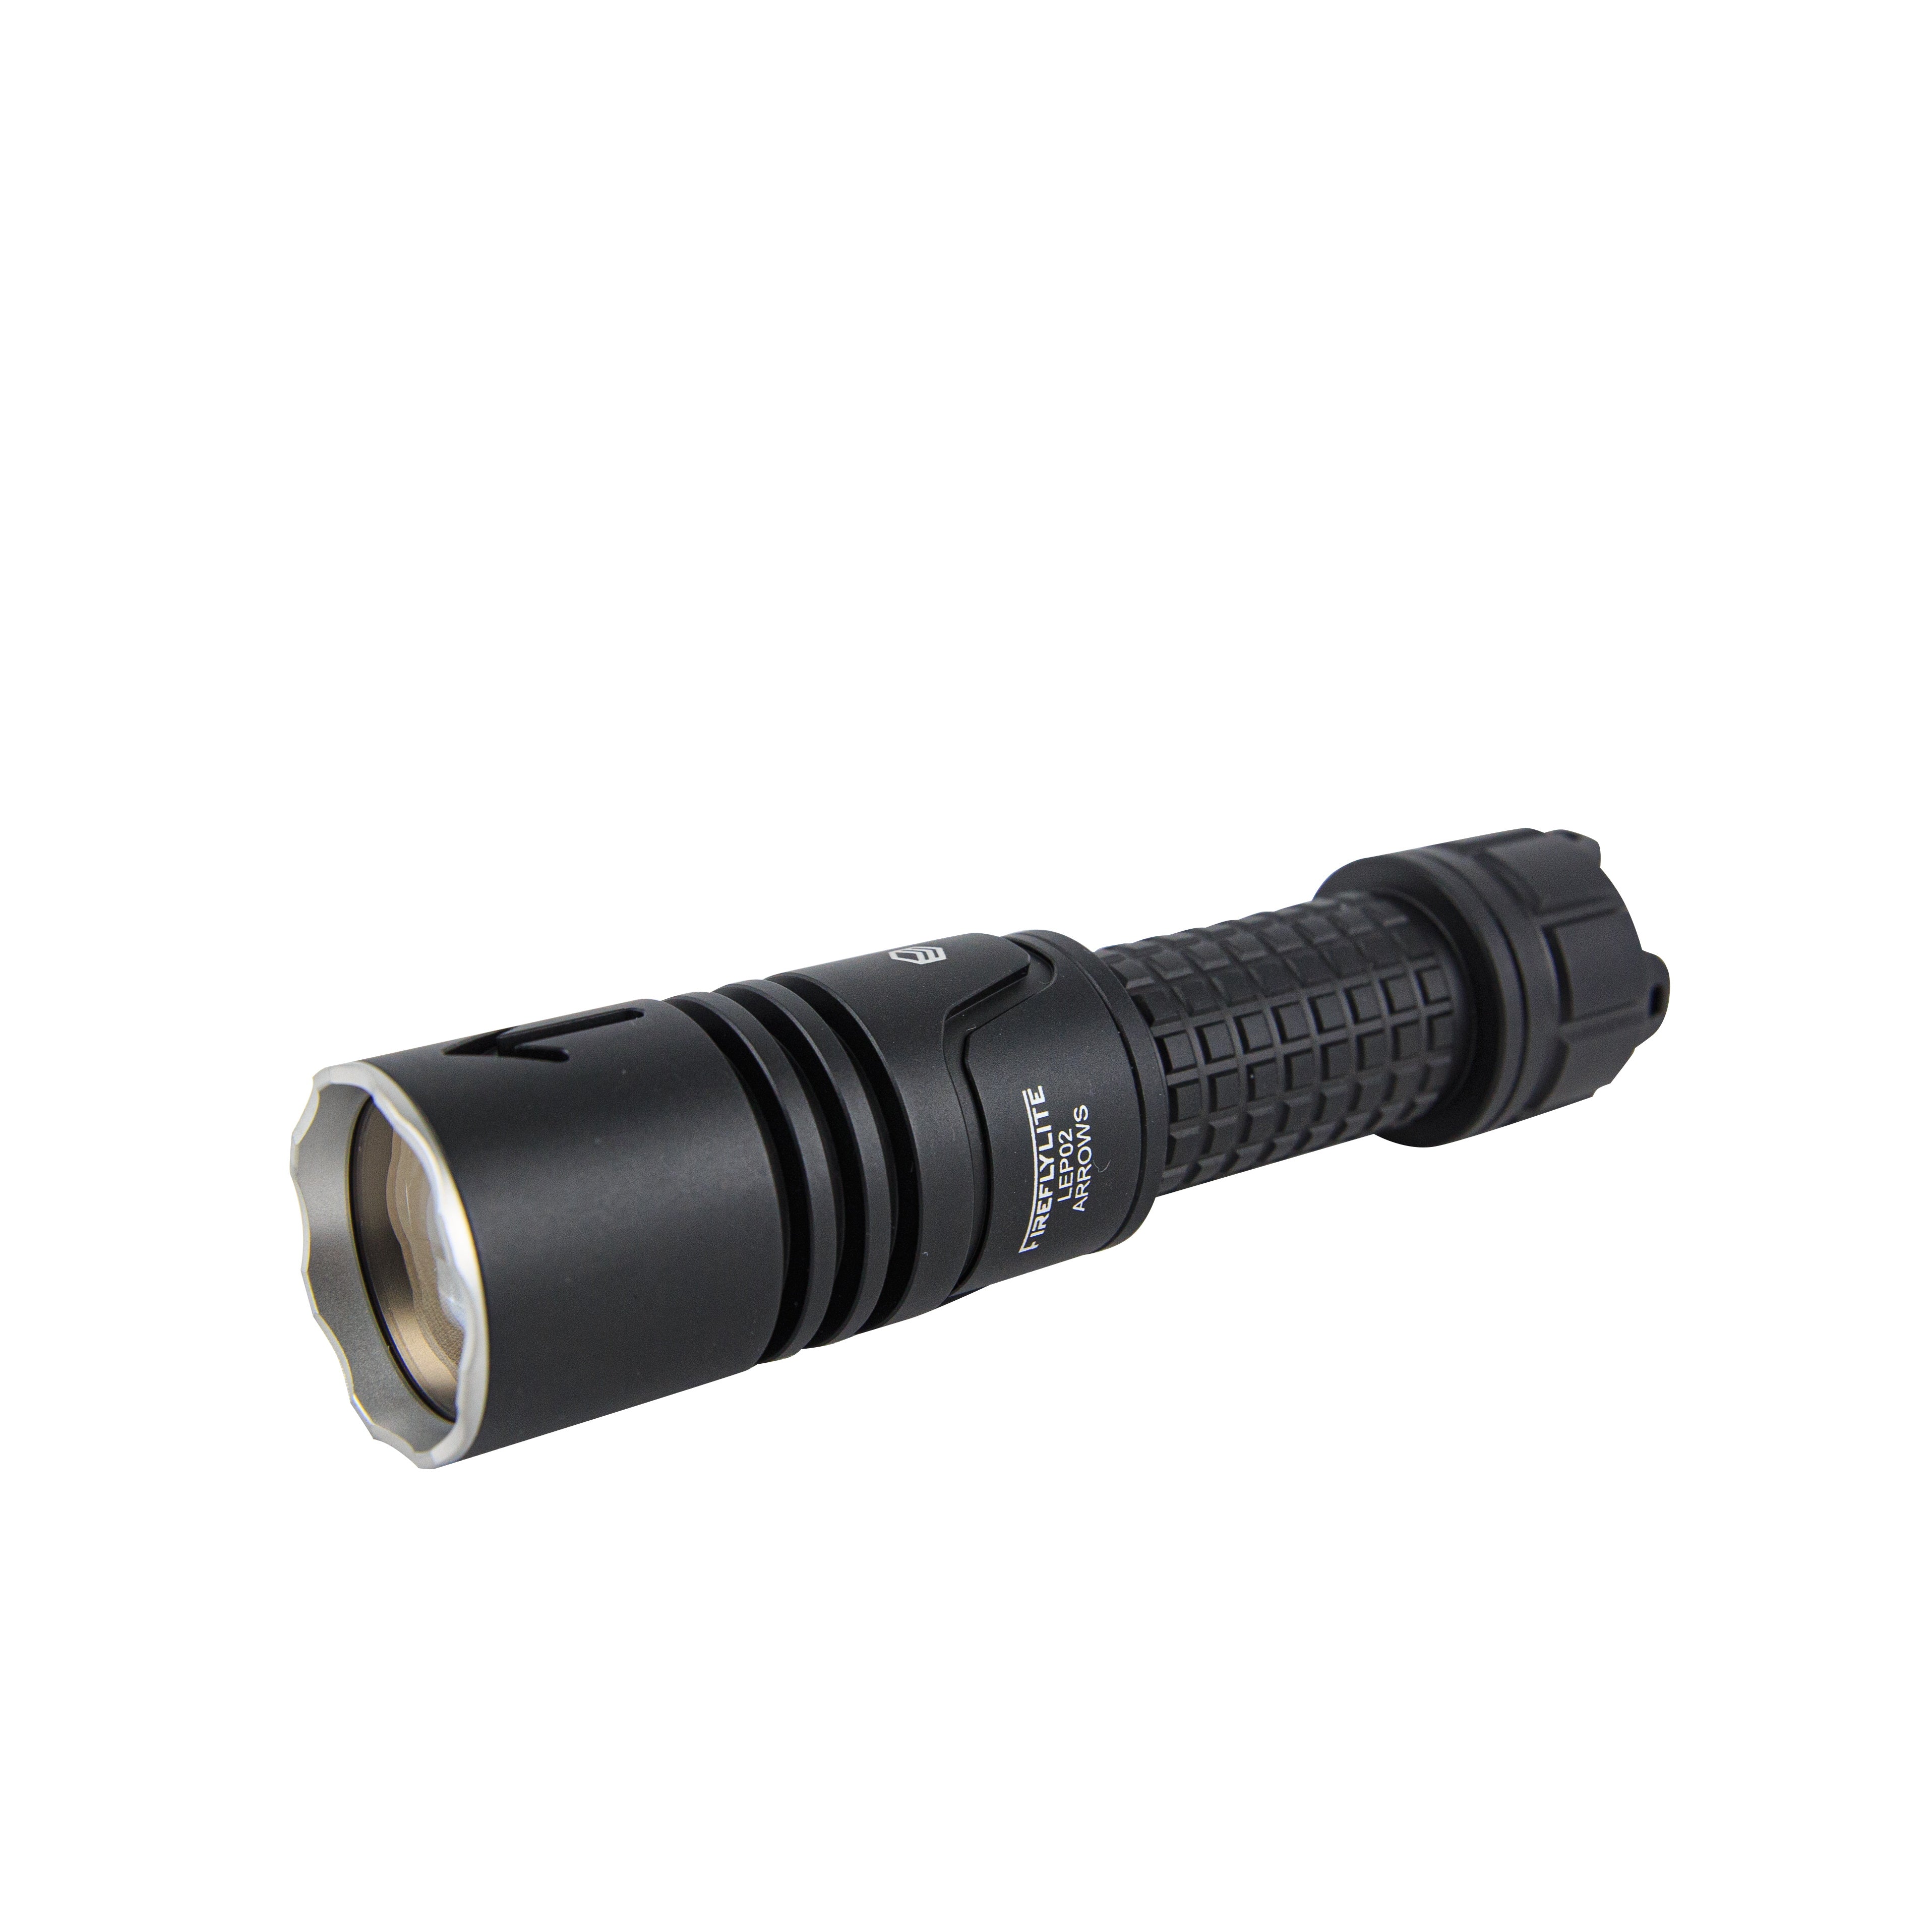 Fireflylite LEP02 ARROWS White Laser Tactical Flashlight